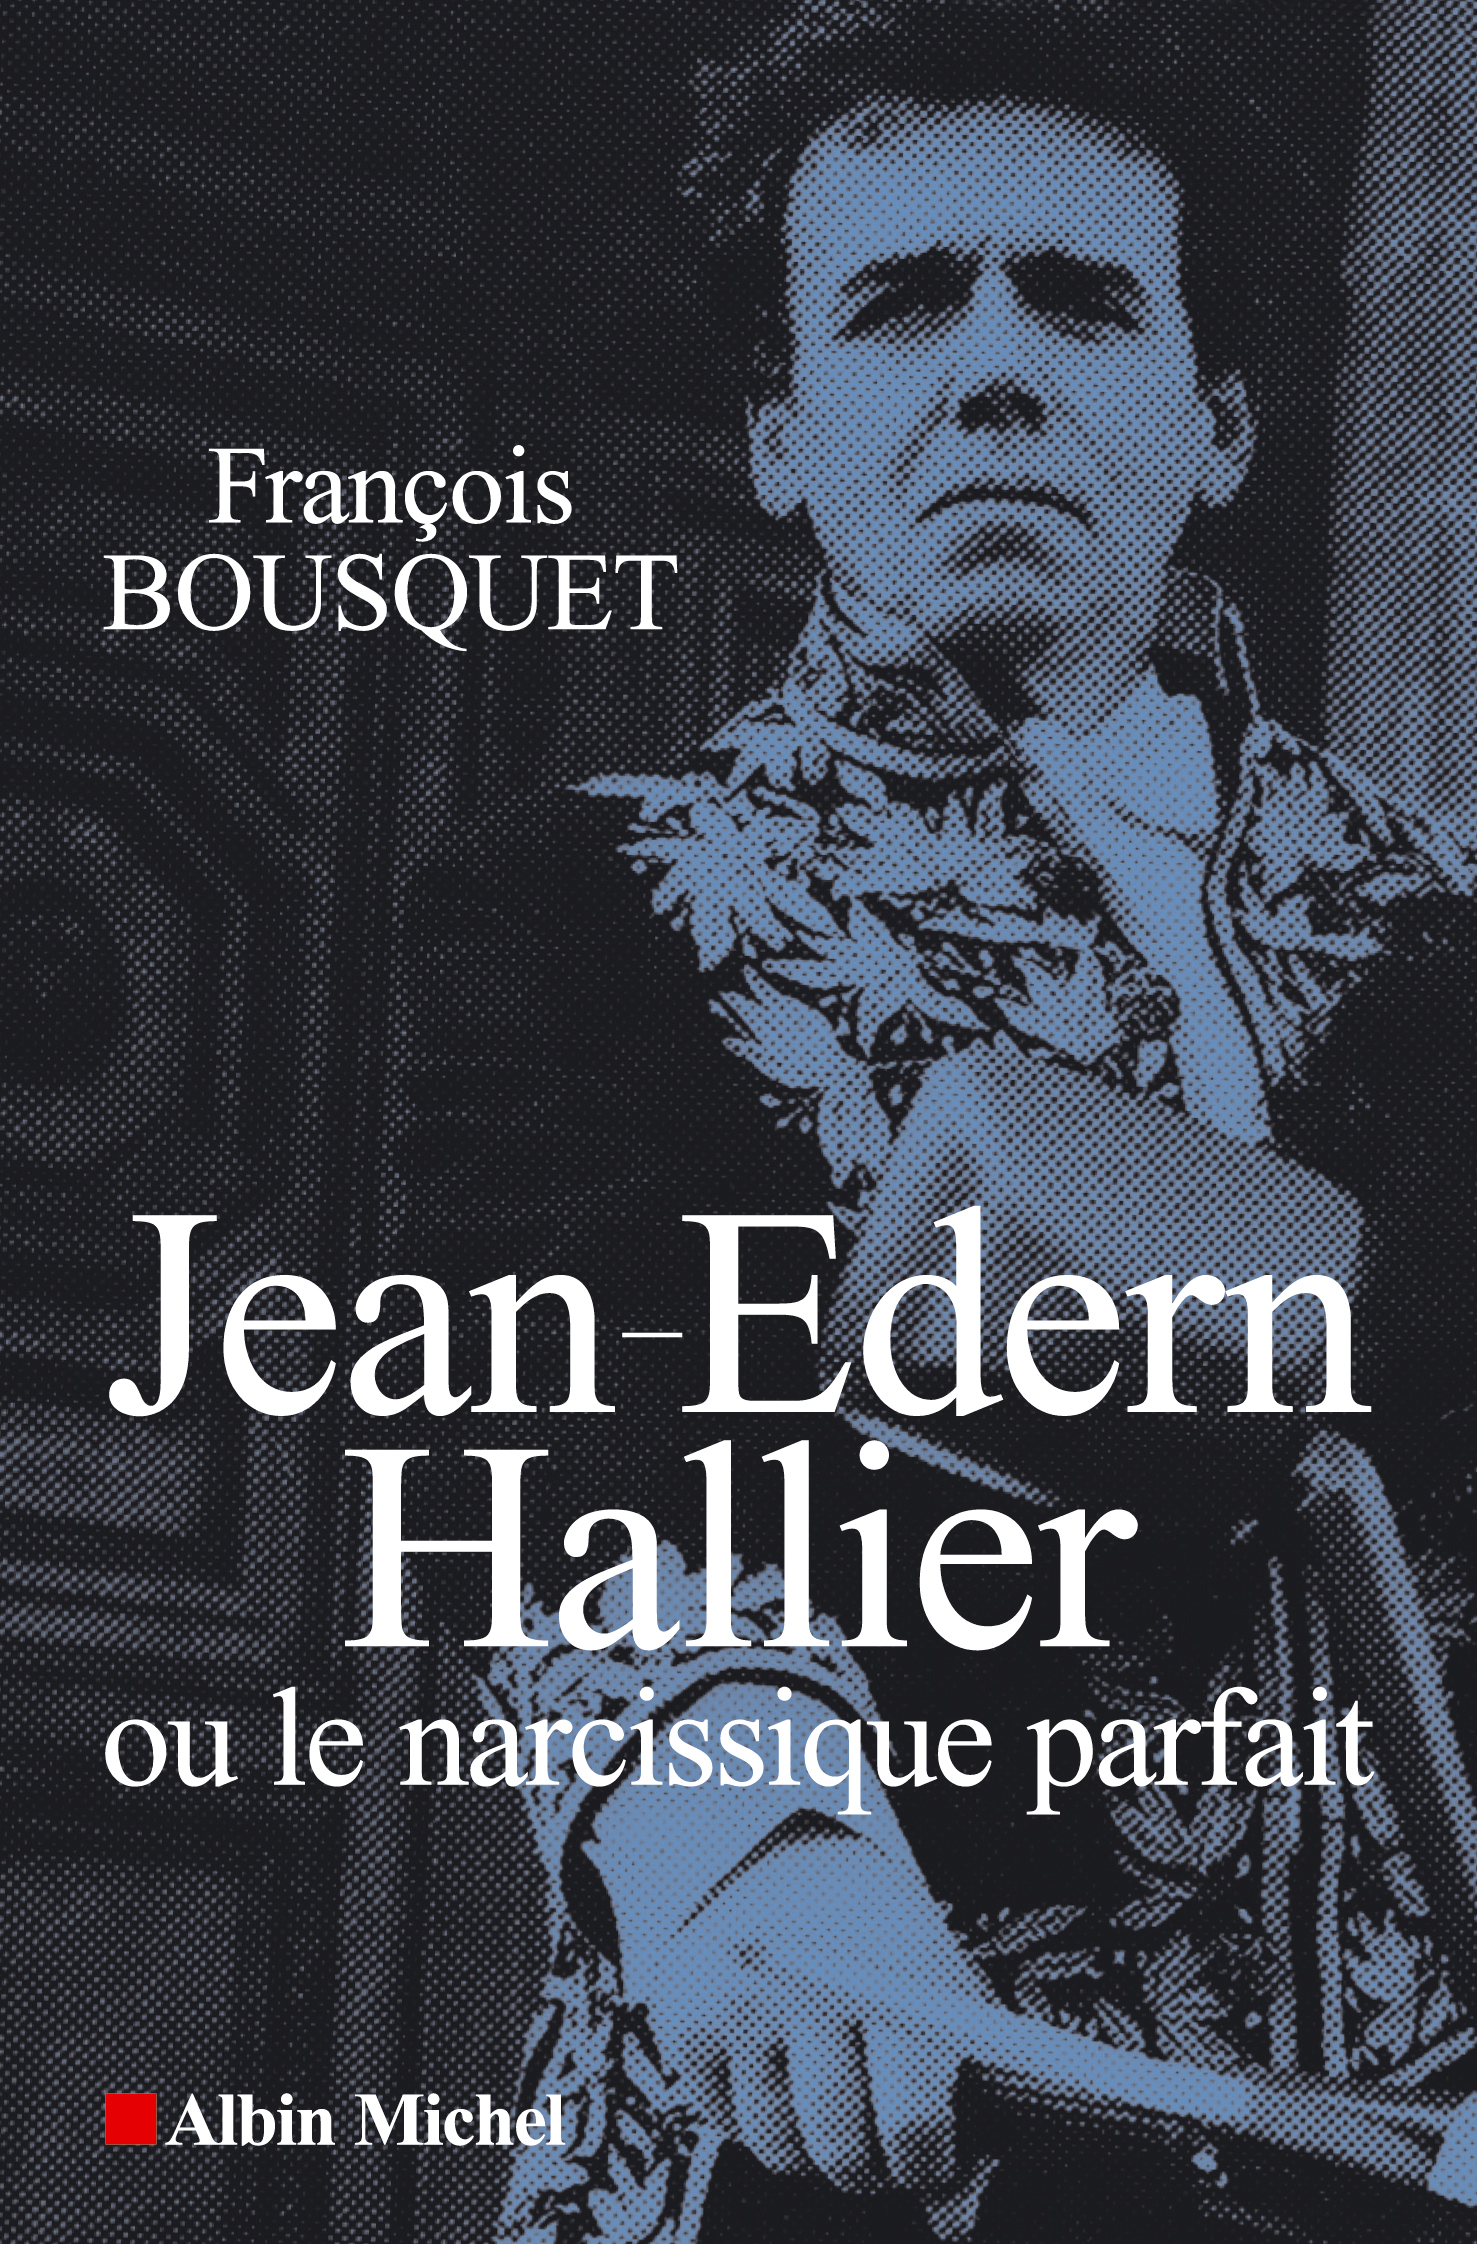 Couverture du livre Jean-Edern Hallier